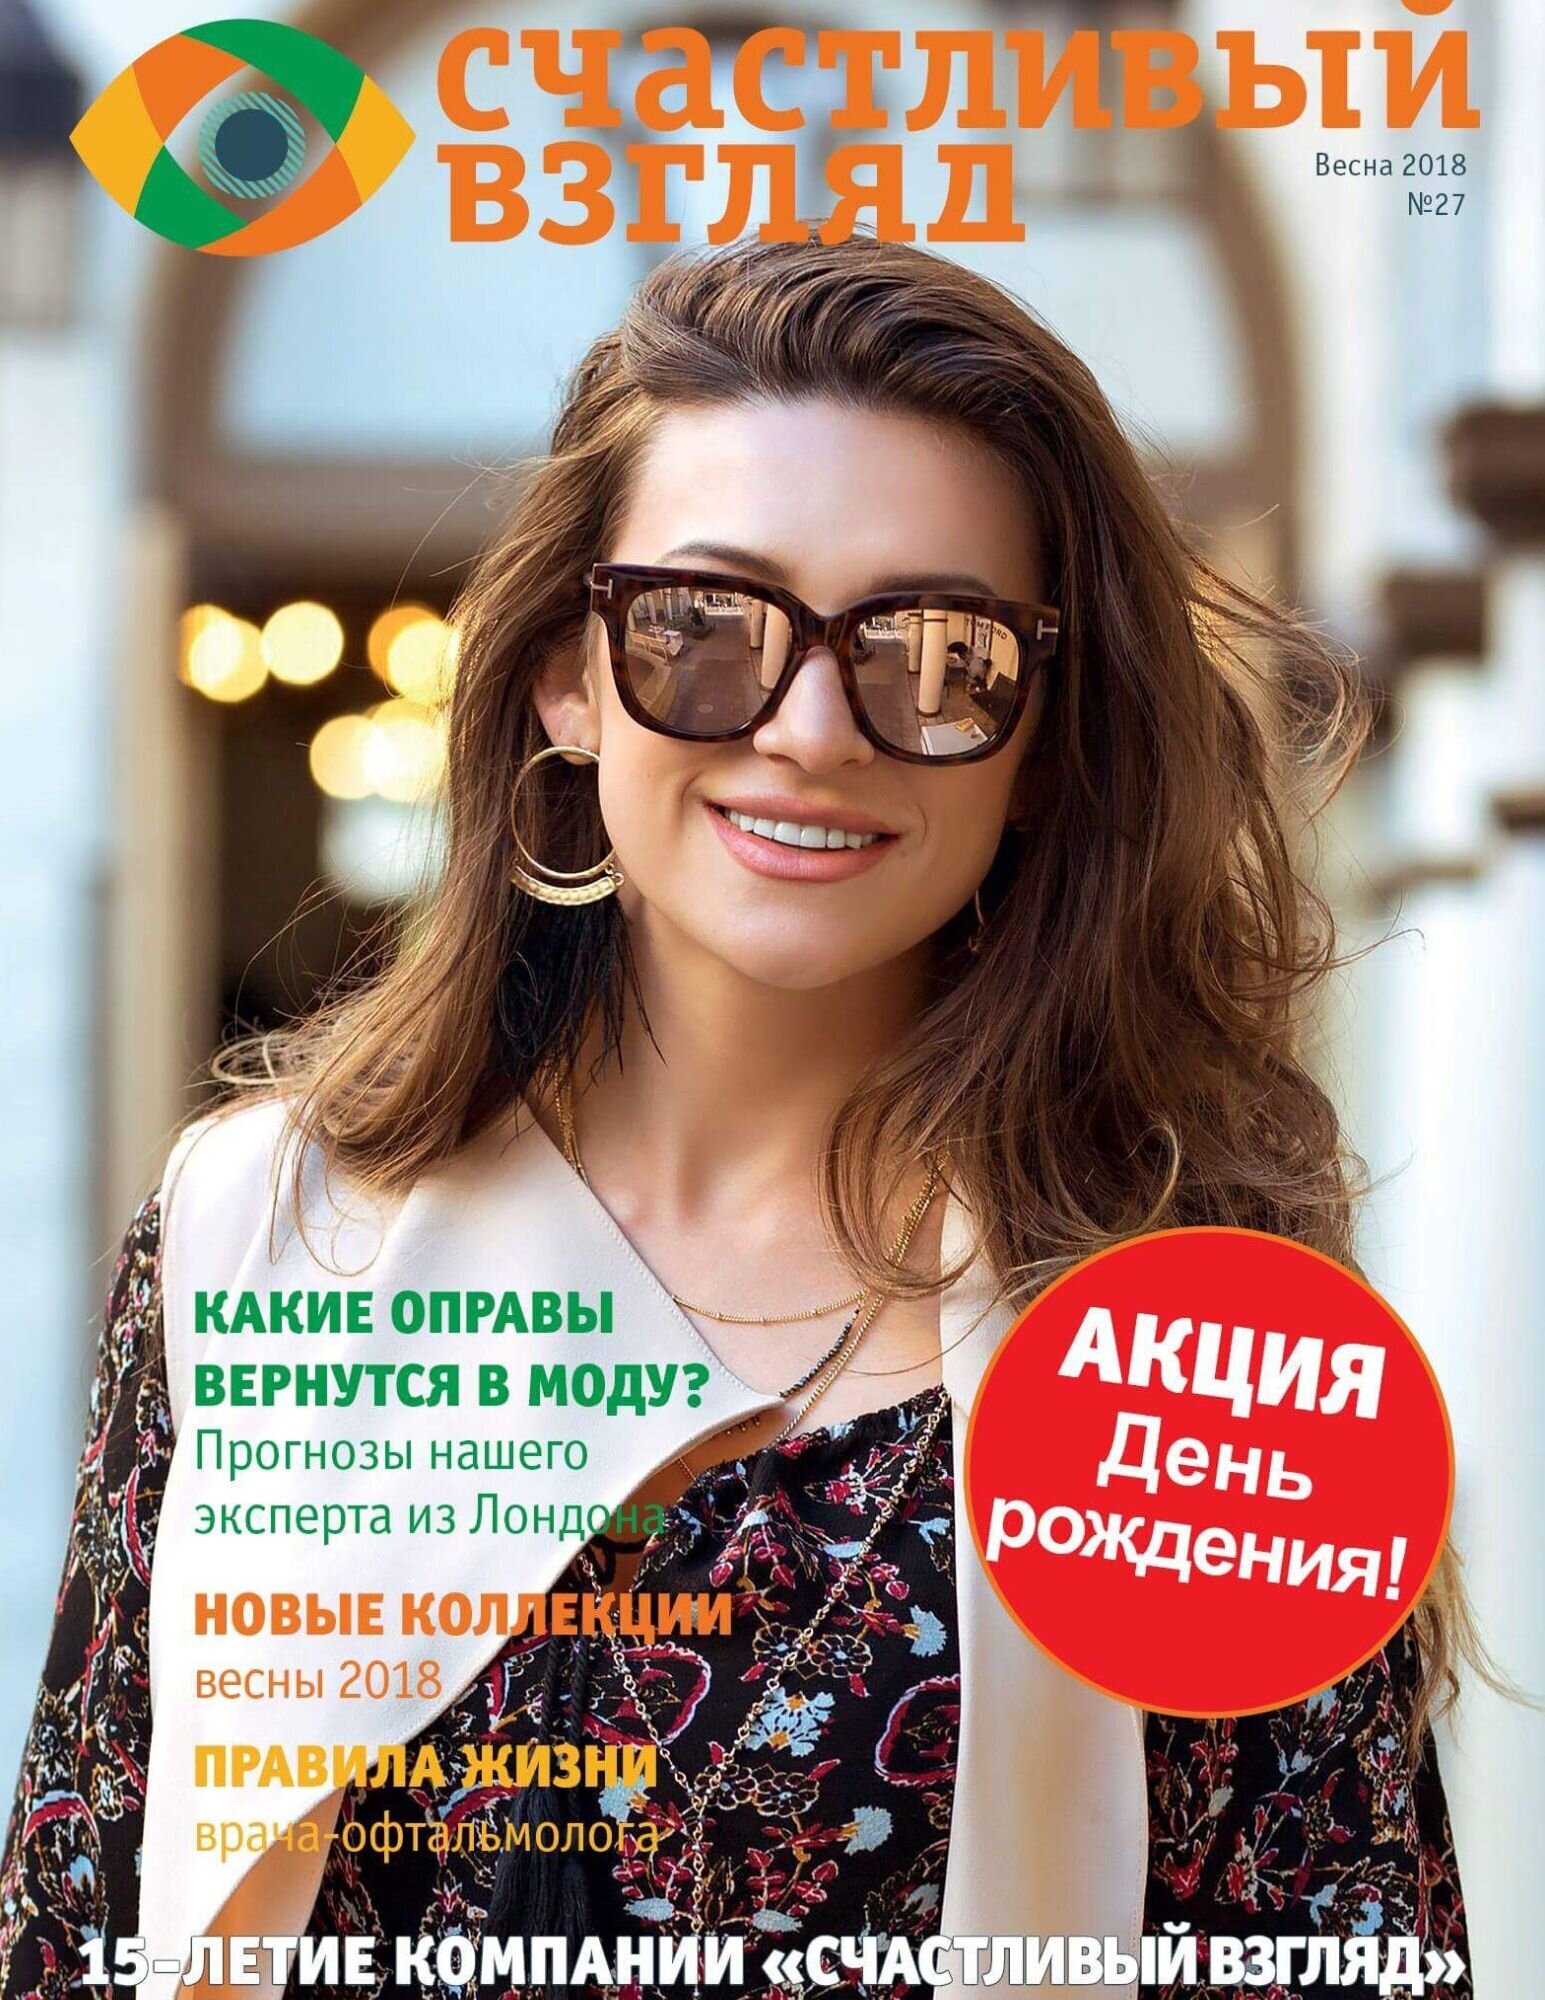 Russian Magazine featuring featuring Cassandra McClure